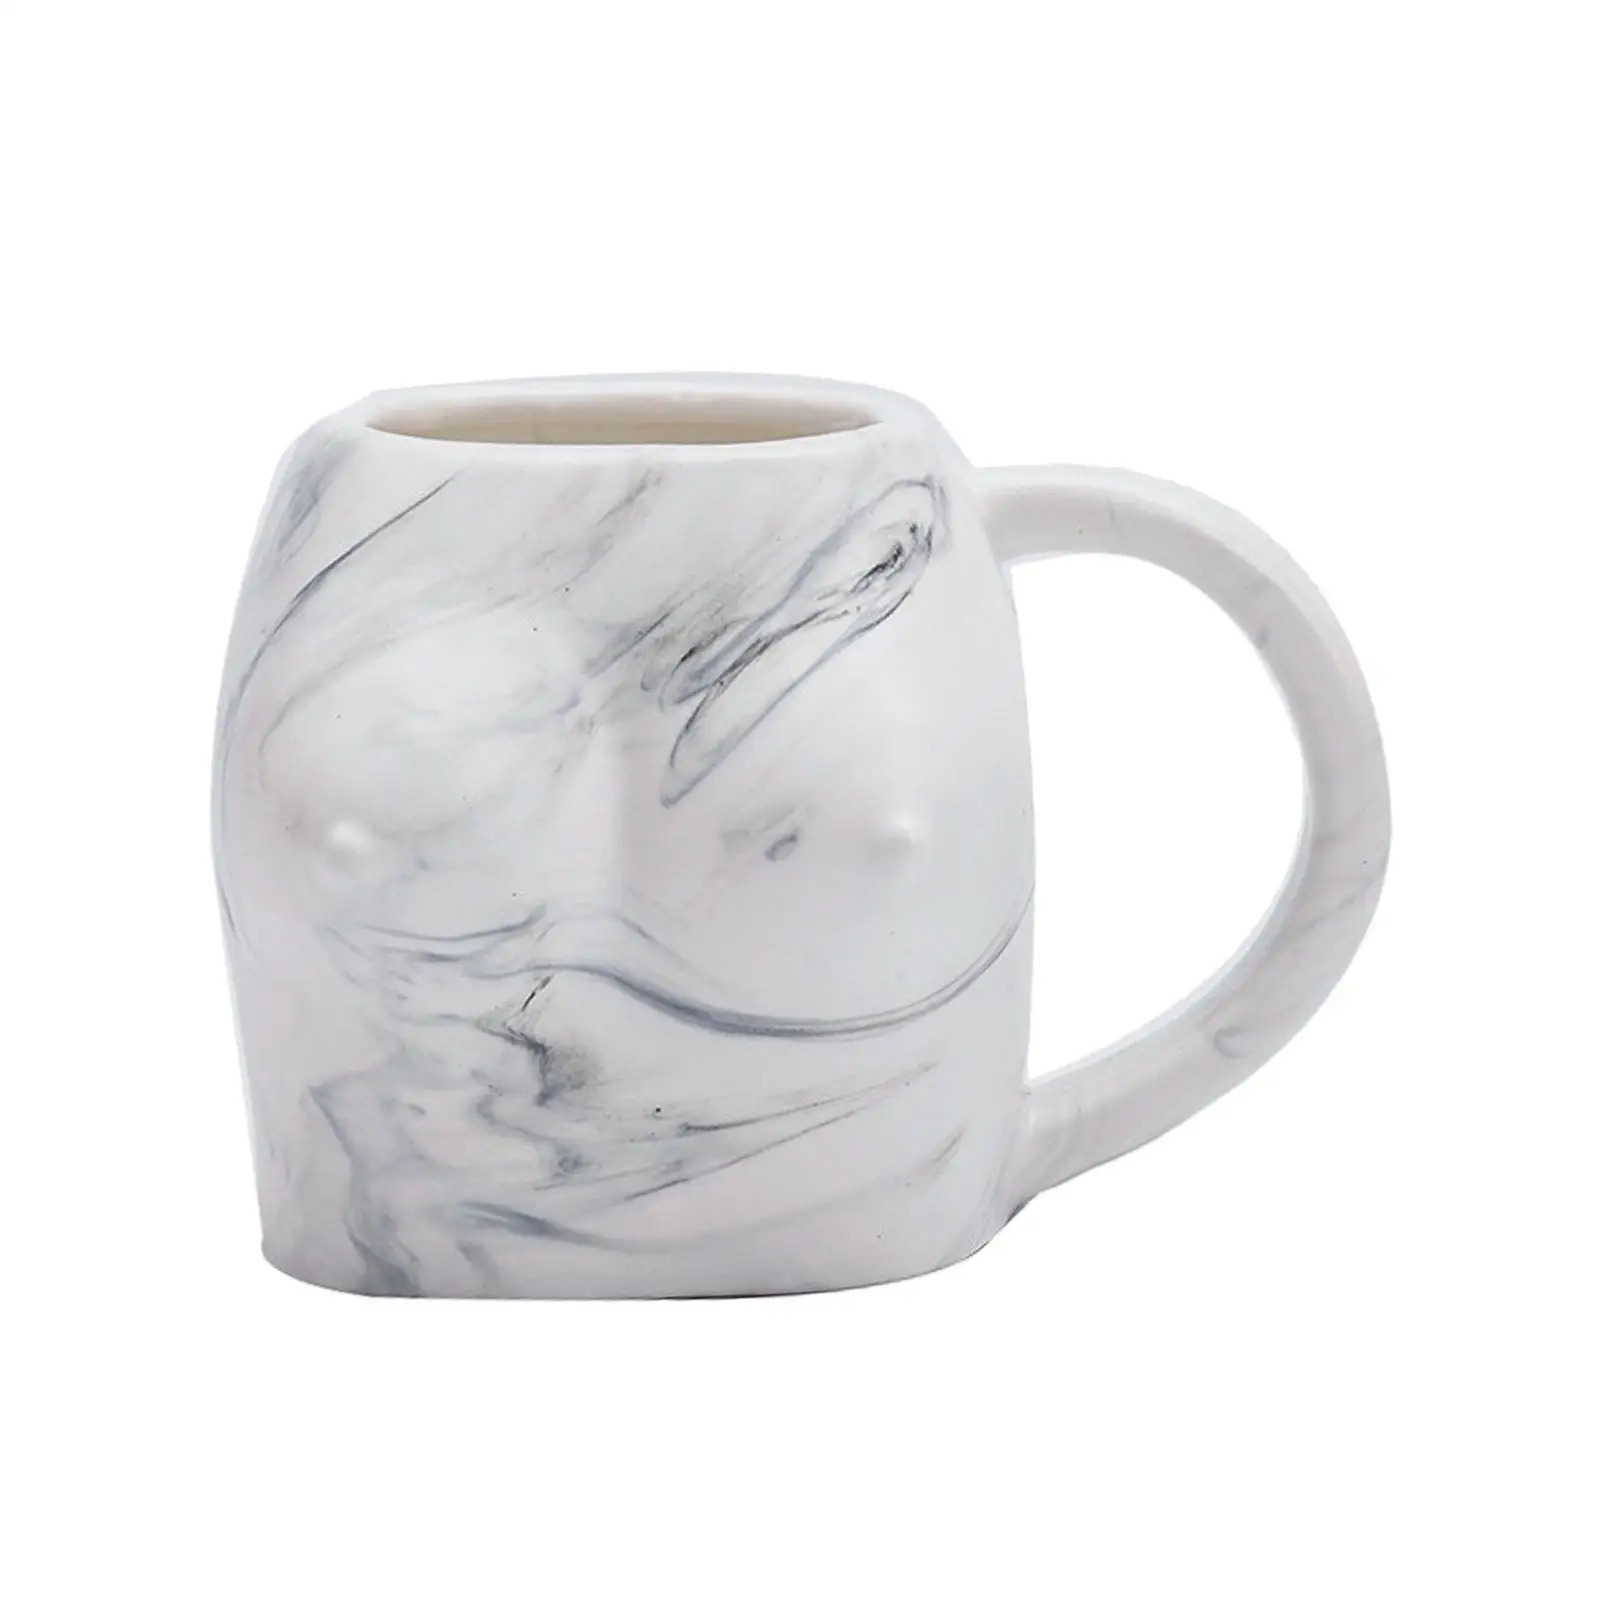 Creative Coffee Mug Household Milk Mug Ceramic Female Body Art Drinking Cup for